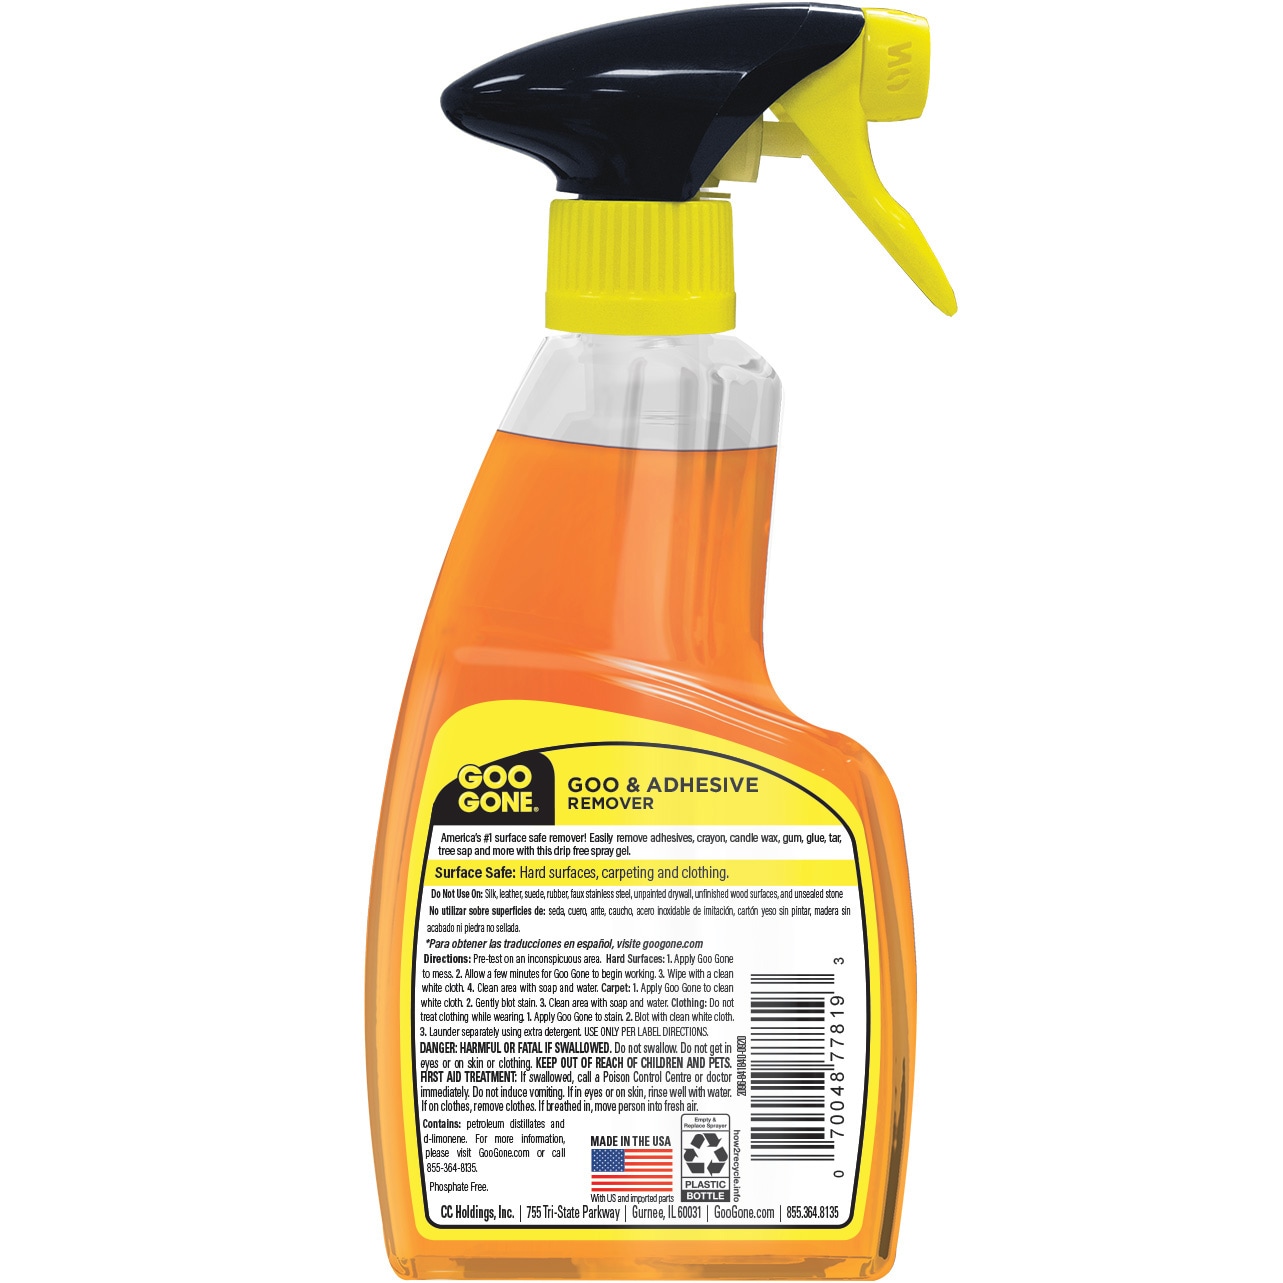 Goo Gone® Original Cleaner, Citrus Scent, 8 oz Bottle, 12/Carton